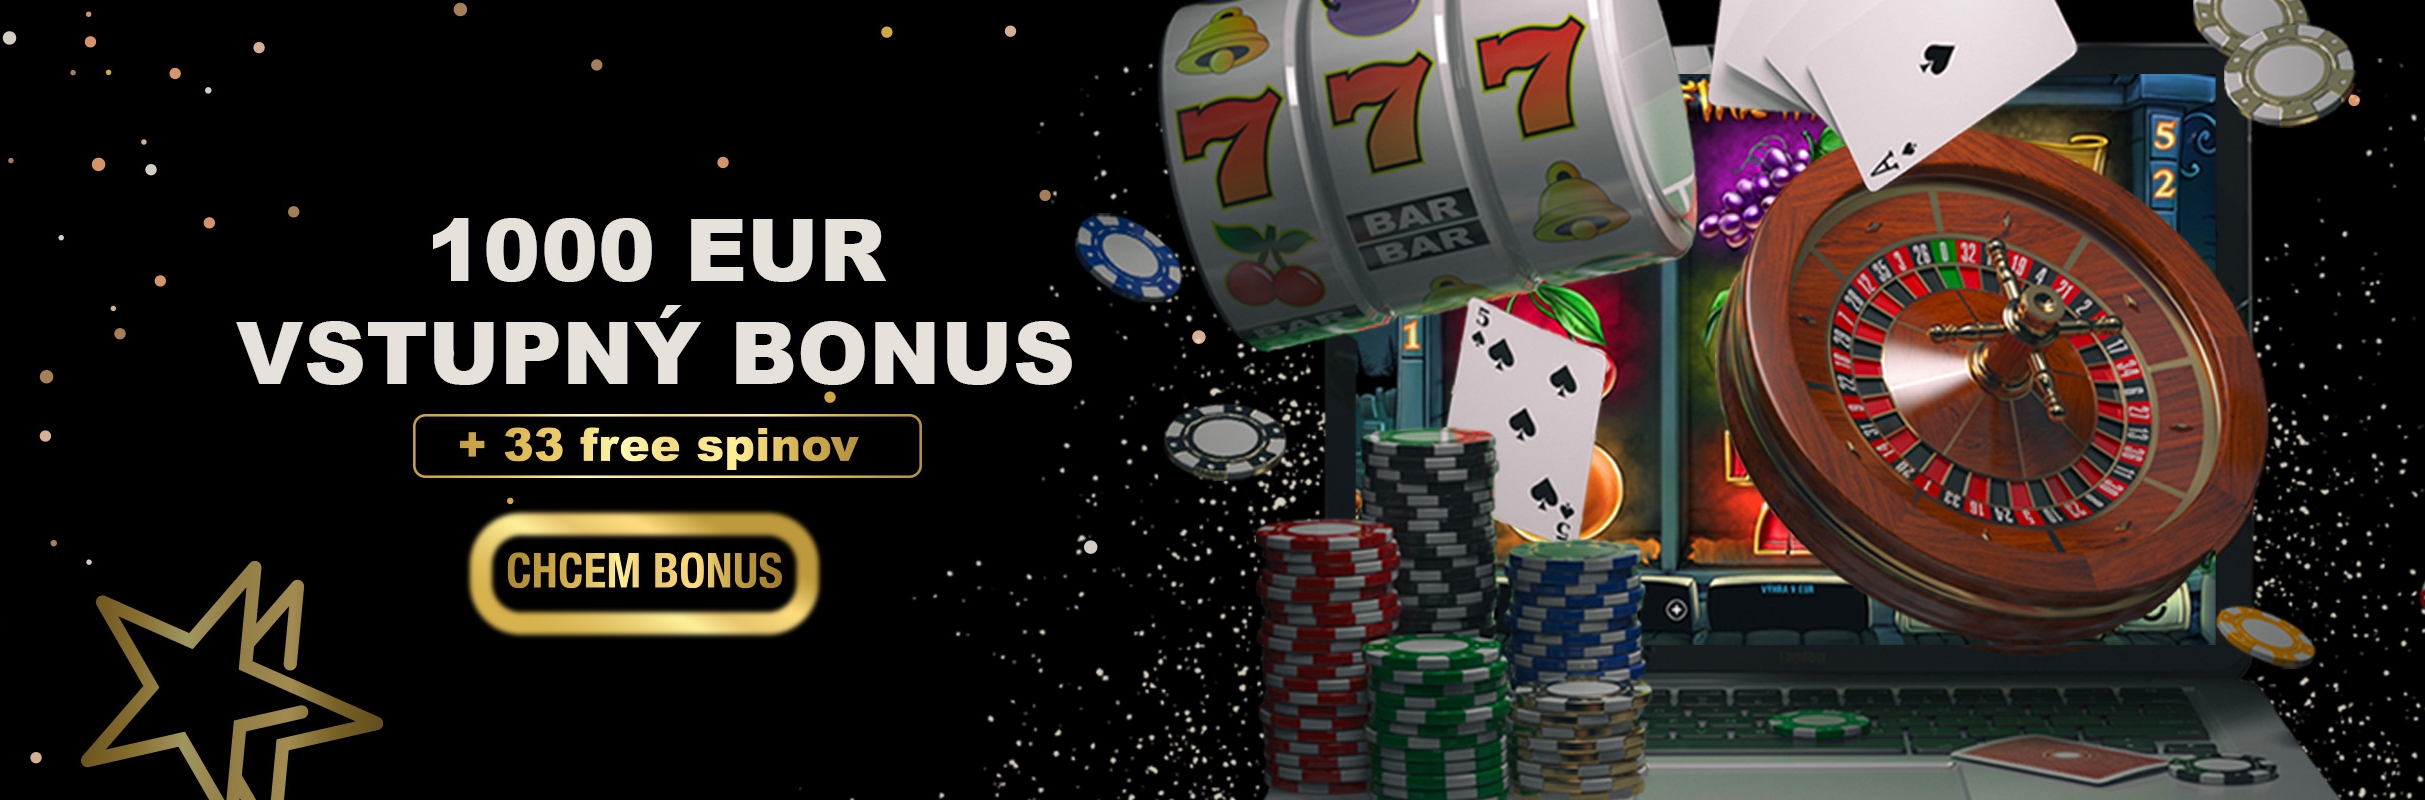 Double Star online kasíno - vstupný bonus